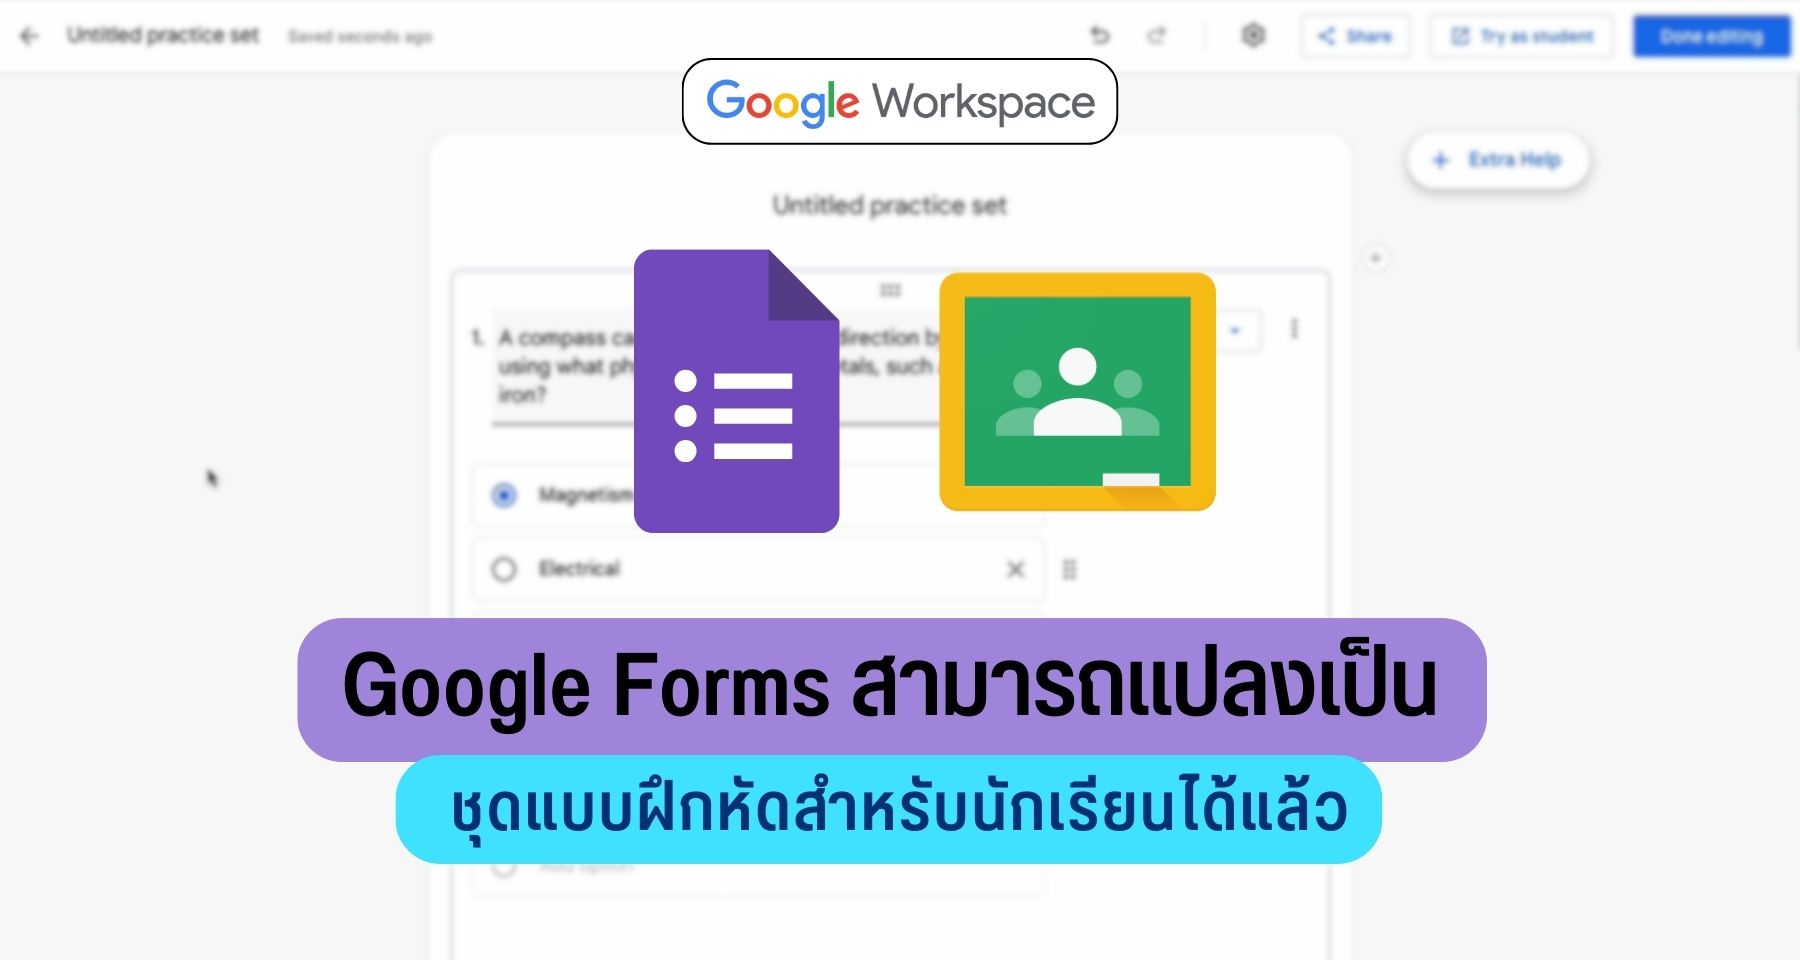 Google Forms สามารถแปลงเป็นชุดแบบฝึกหัดสำหรับนักเรียนได้แล้ว